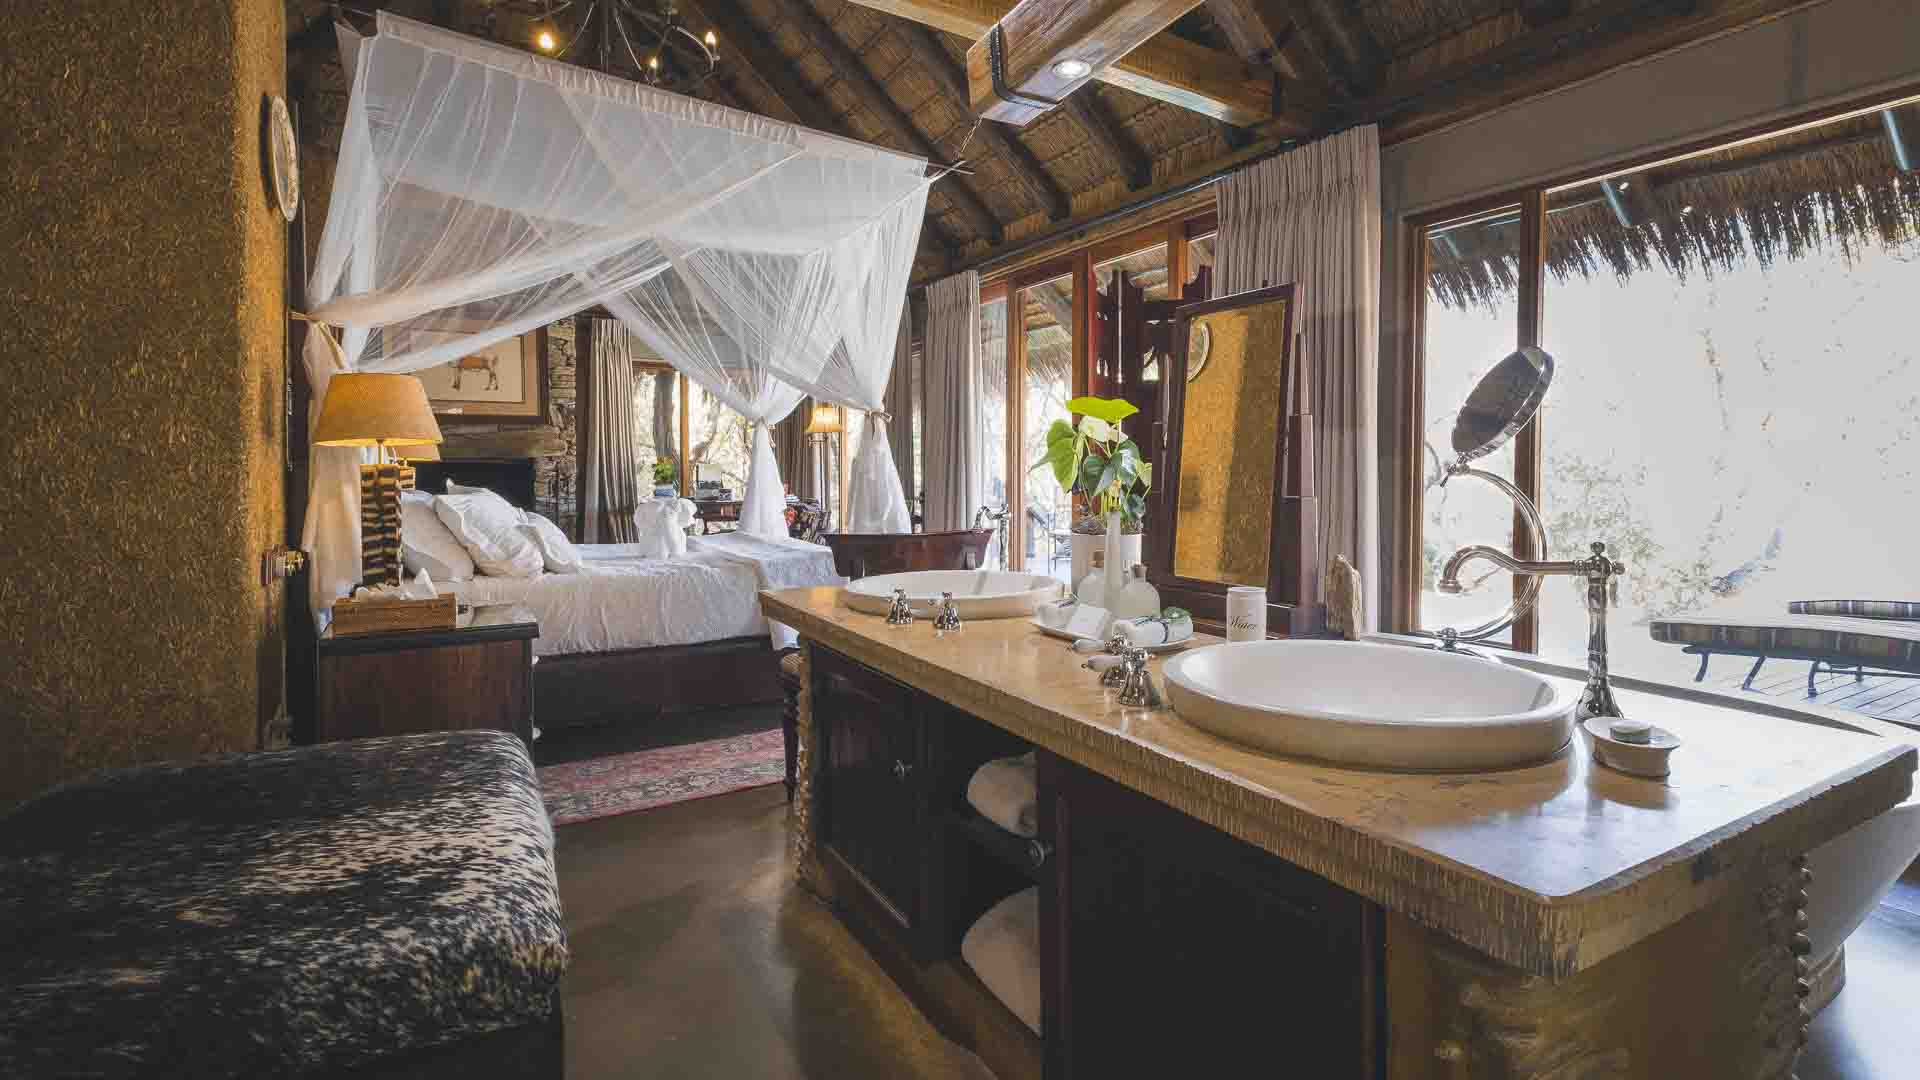 A superior suite bedroom and bathroom at Jabulani Safari Lodge.